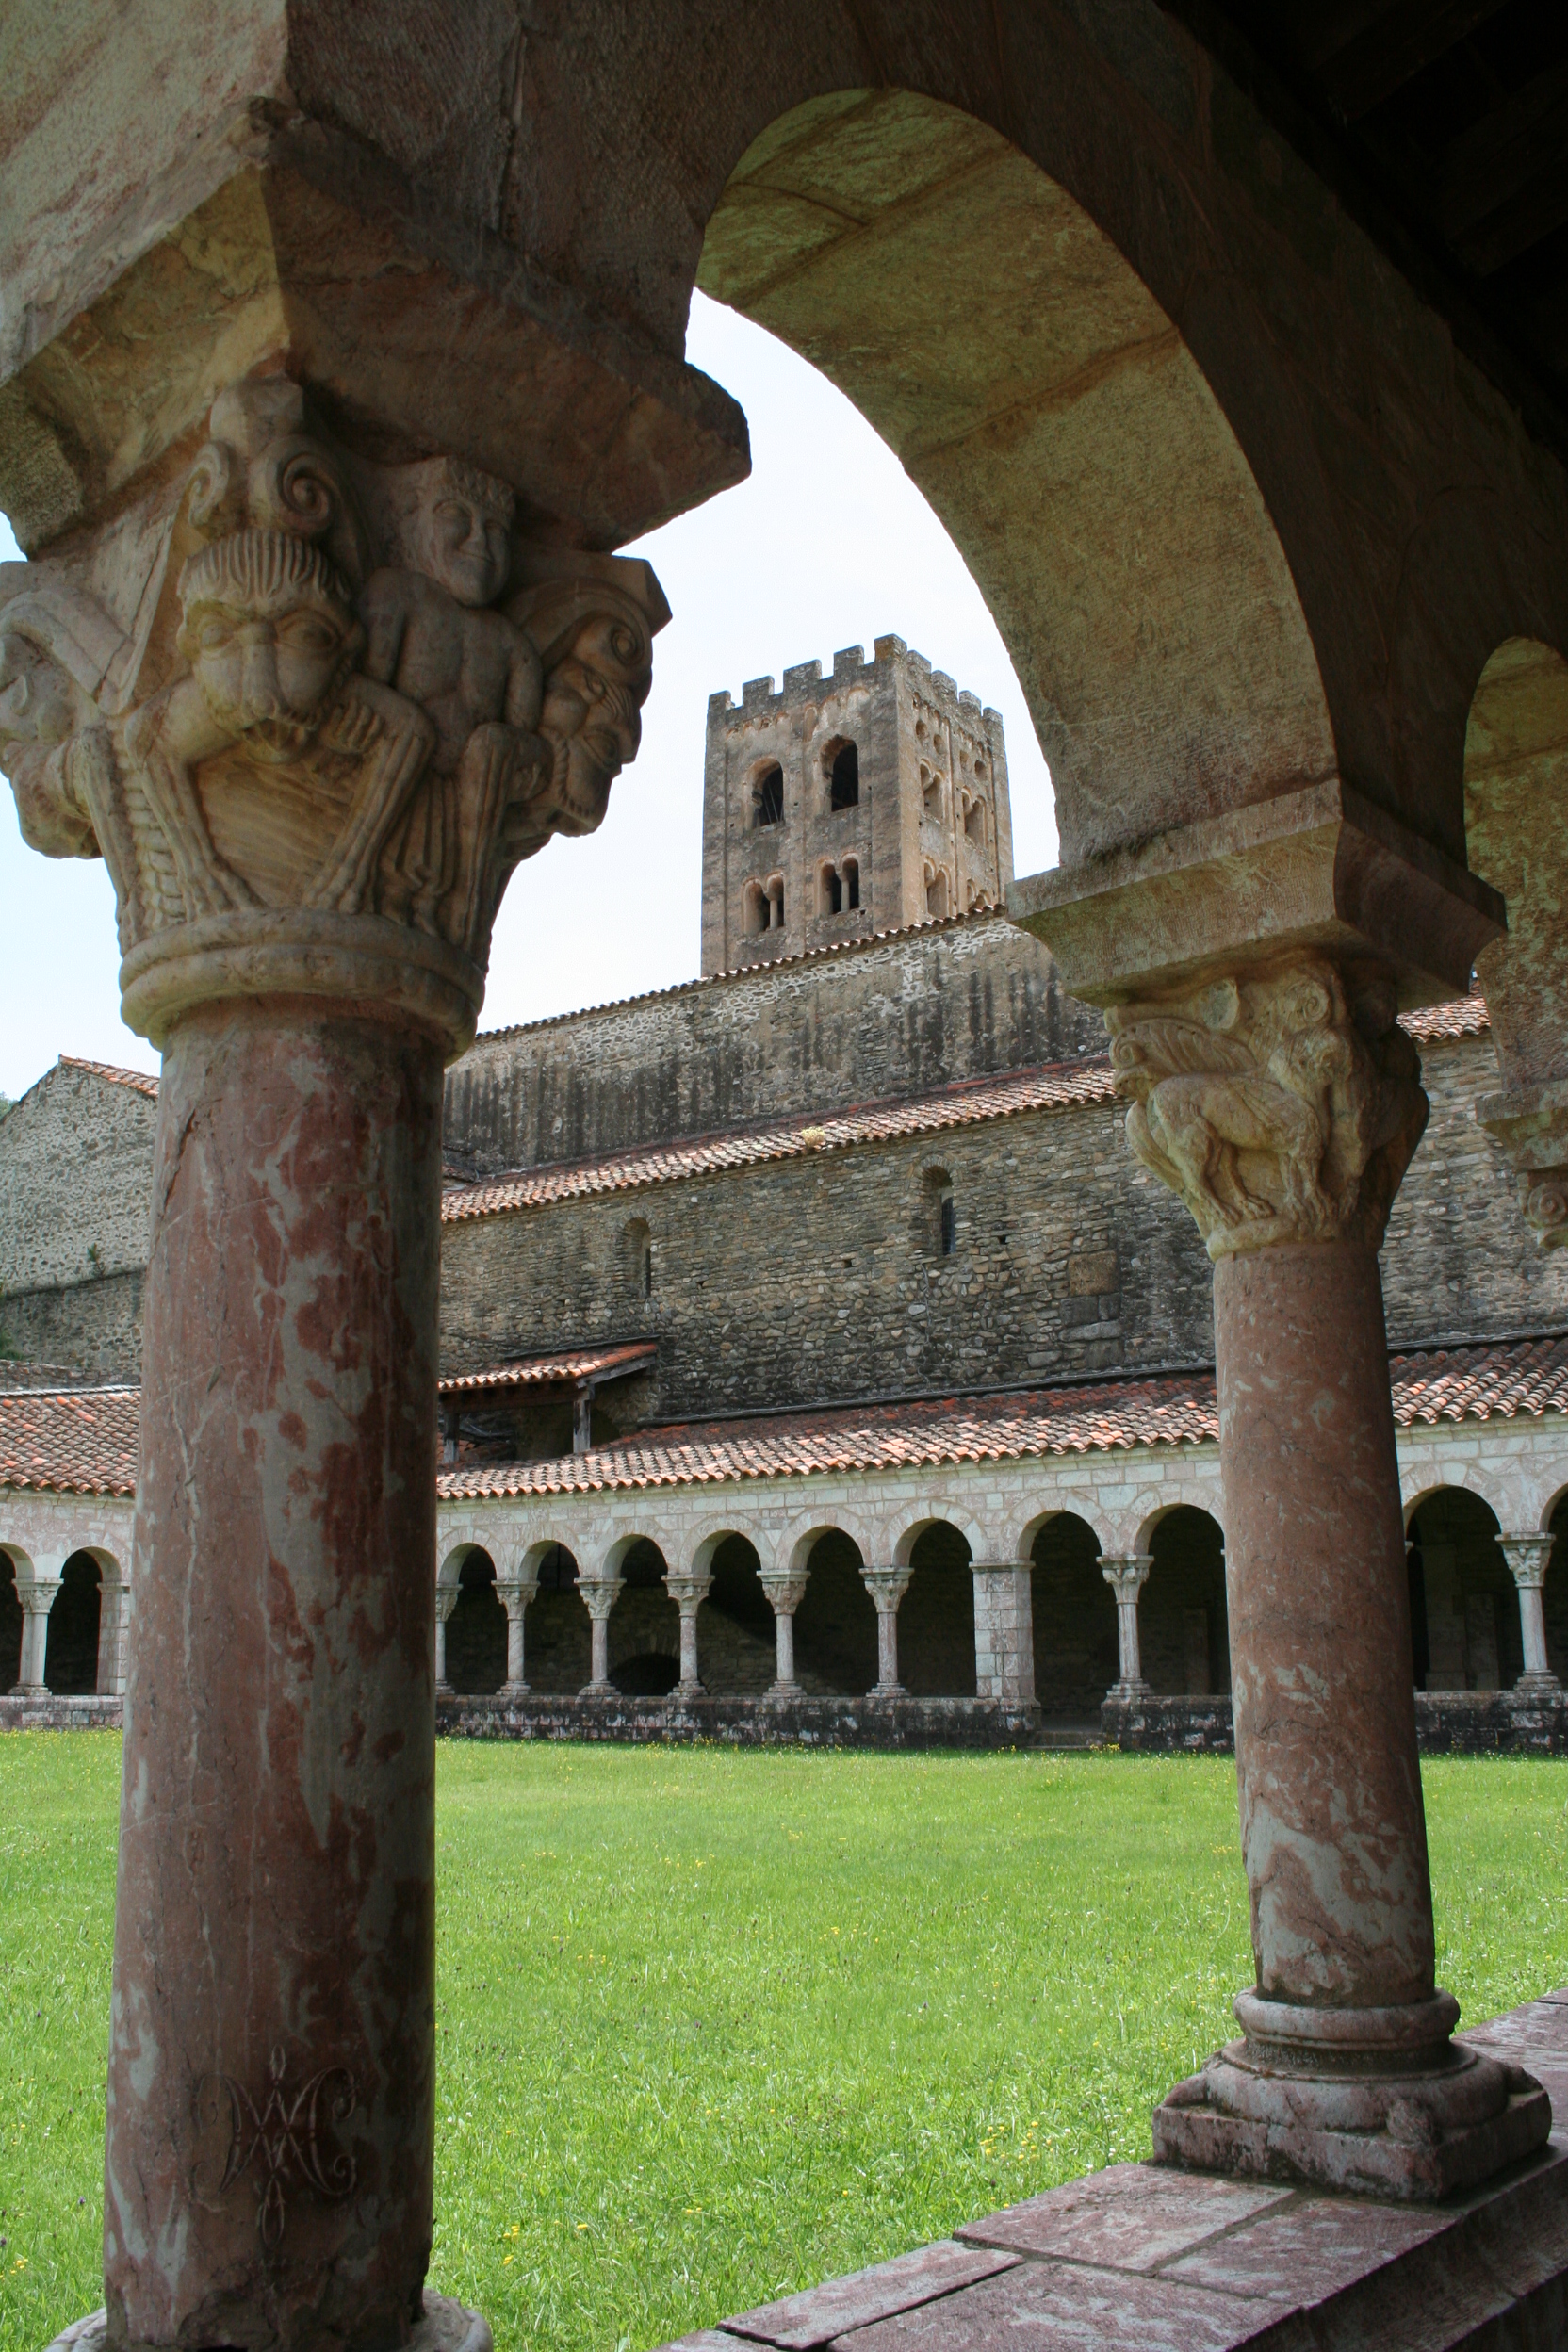 The cloisters and the church of Sant Miquel de Cuixà